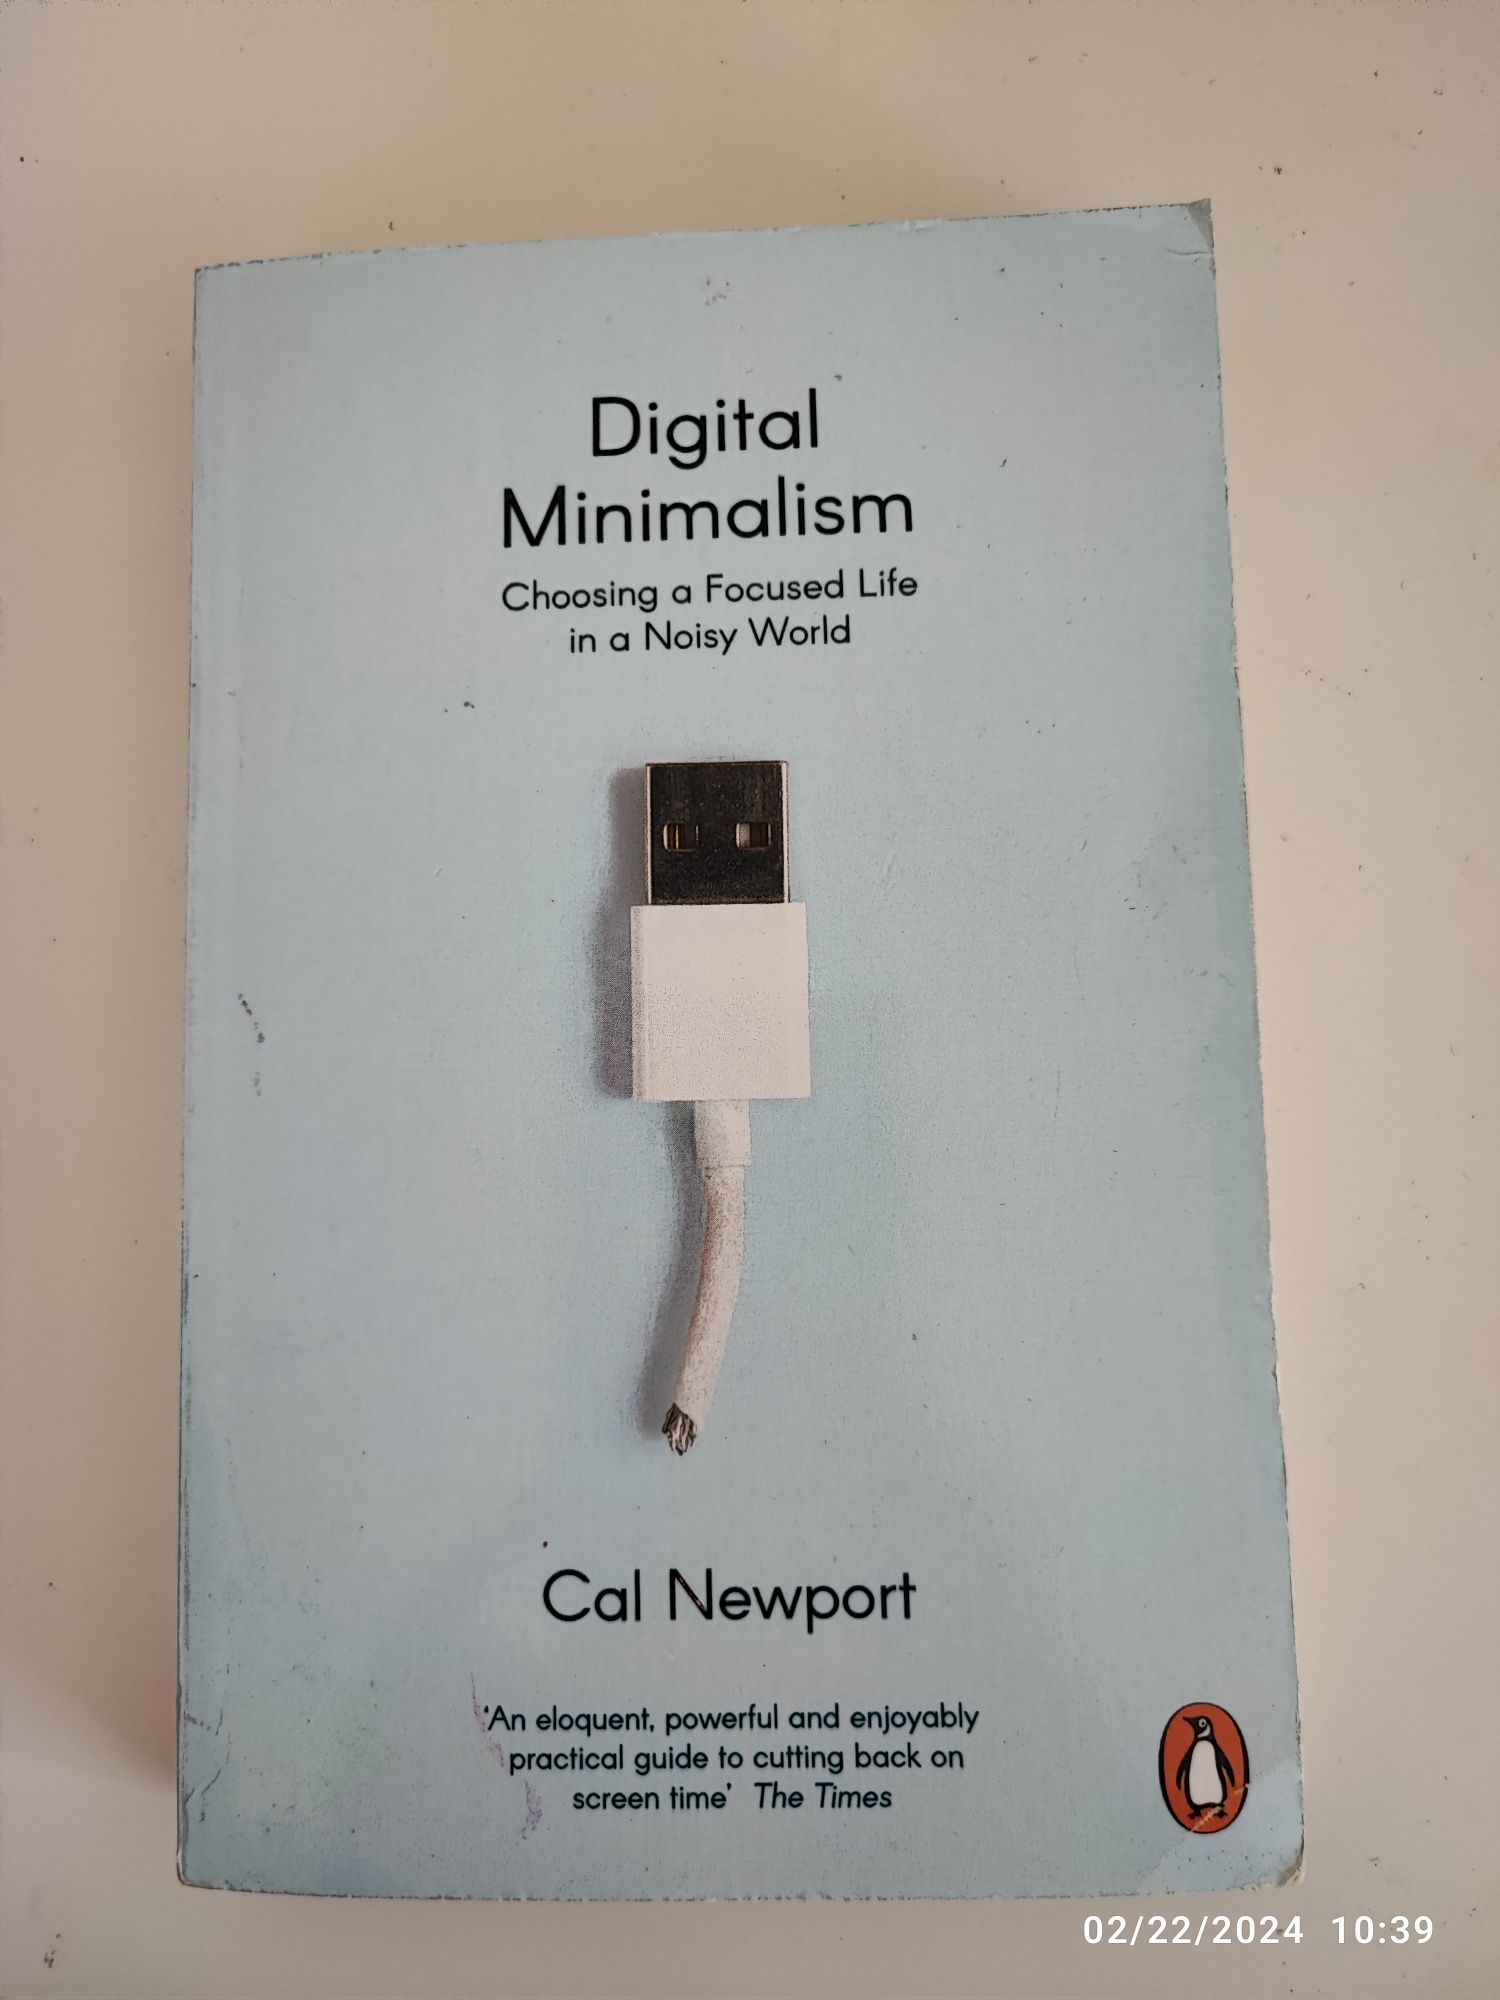 Didital Minimalism, Cal Newport